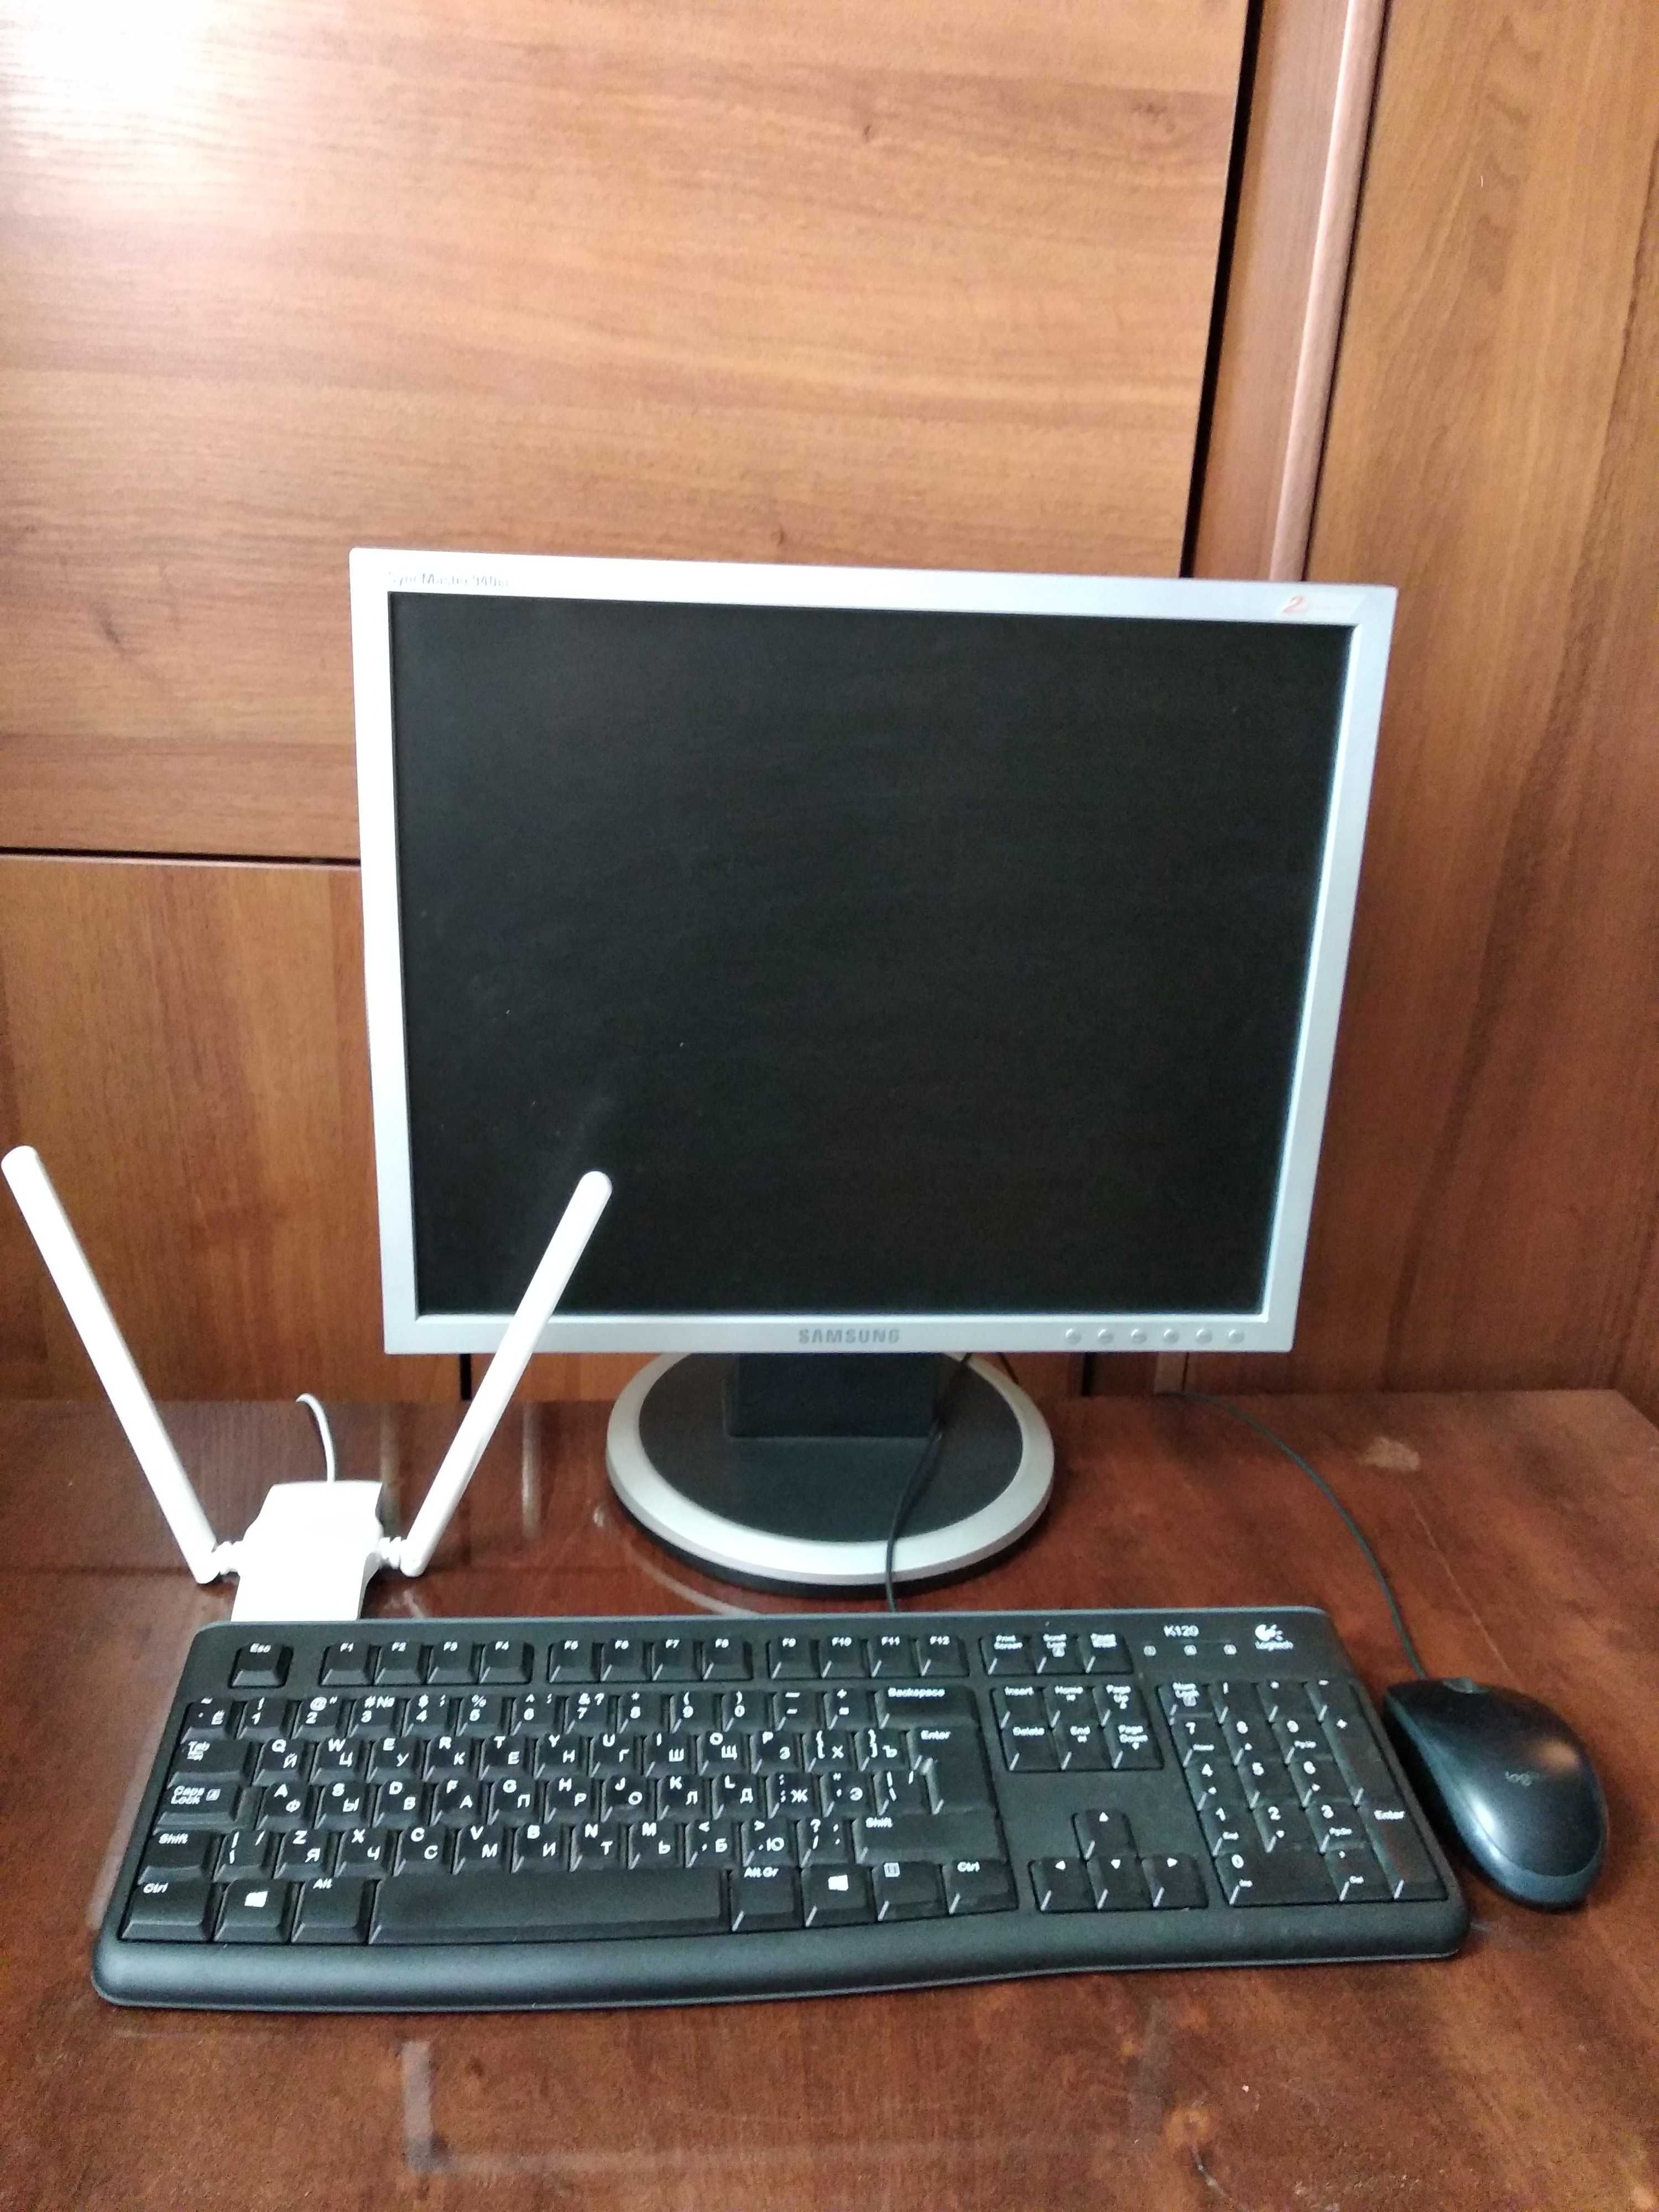 Компьютер: системный блок + 19" монитор + клавиатура + мышь + Интернет